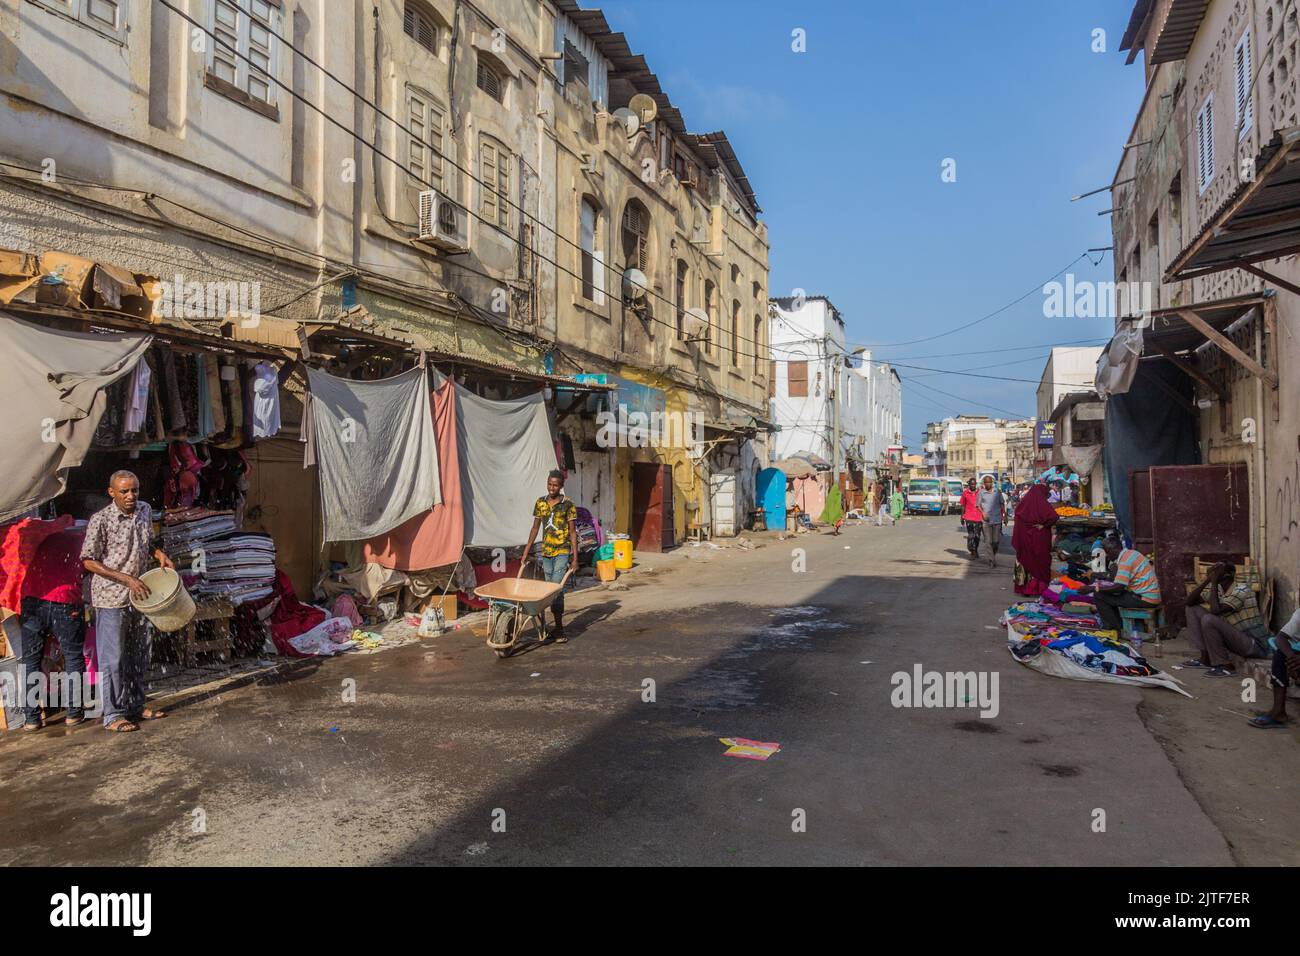 DJIBOUTI, DJIBOUTI - APRIL 17, 2019: View of a street in Djibouti, capital of Djibouti. Stock Photo